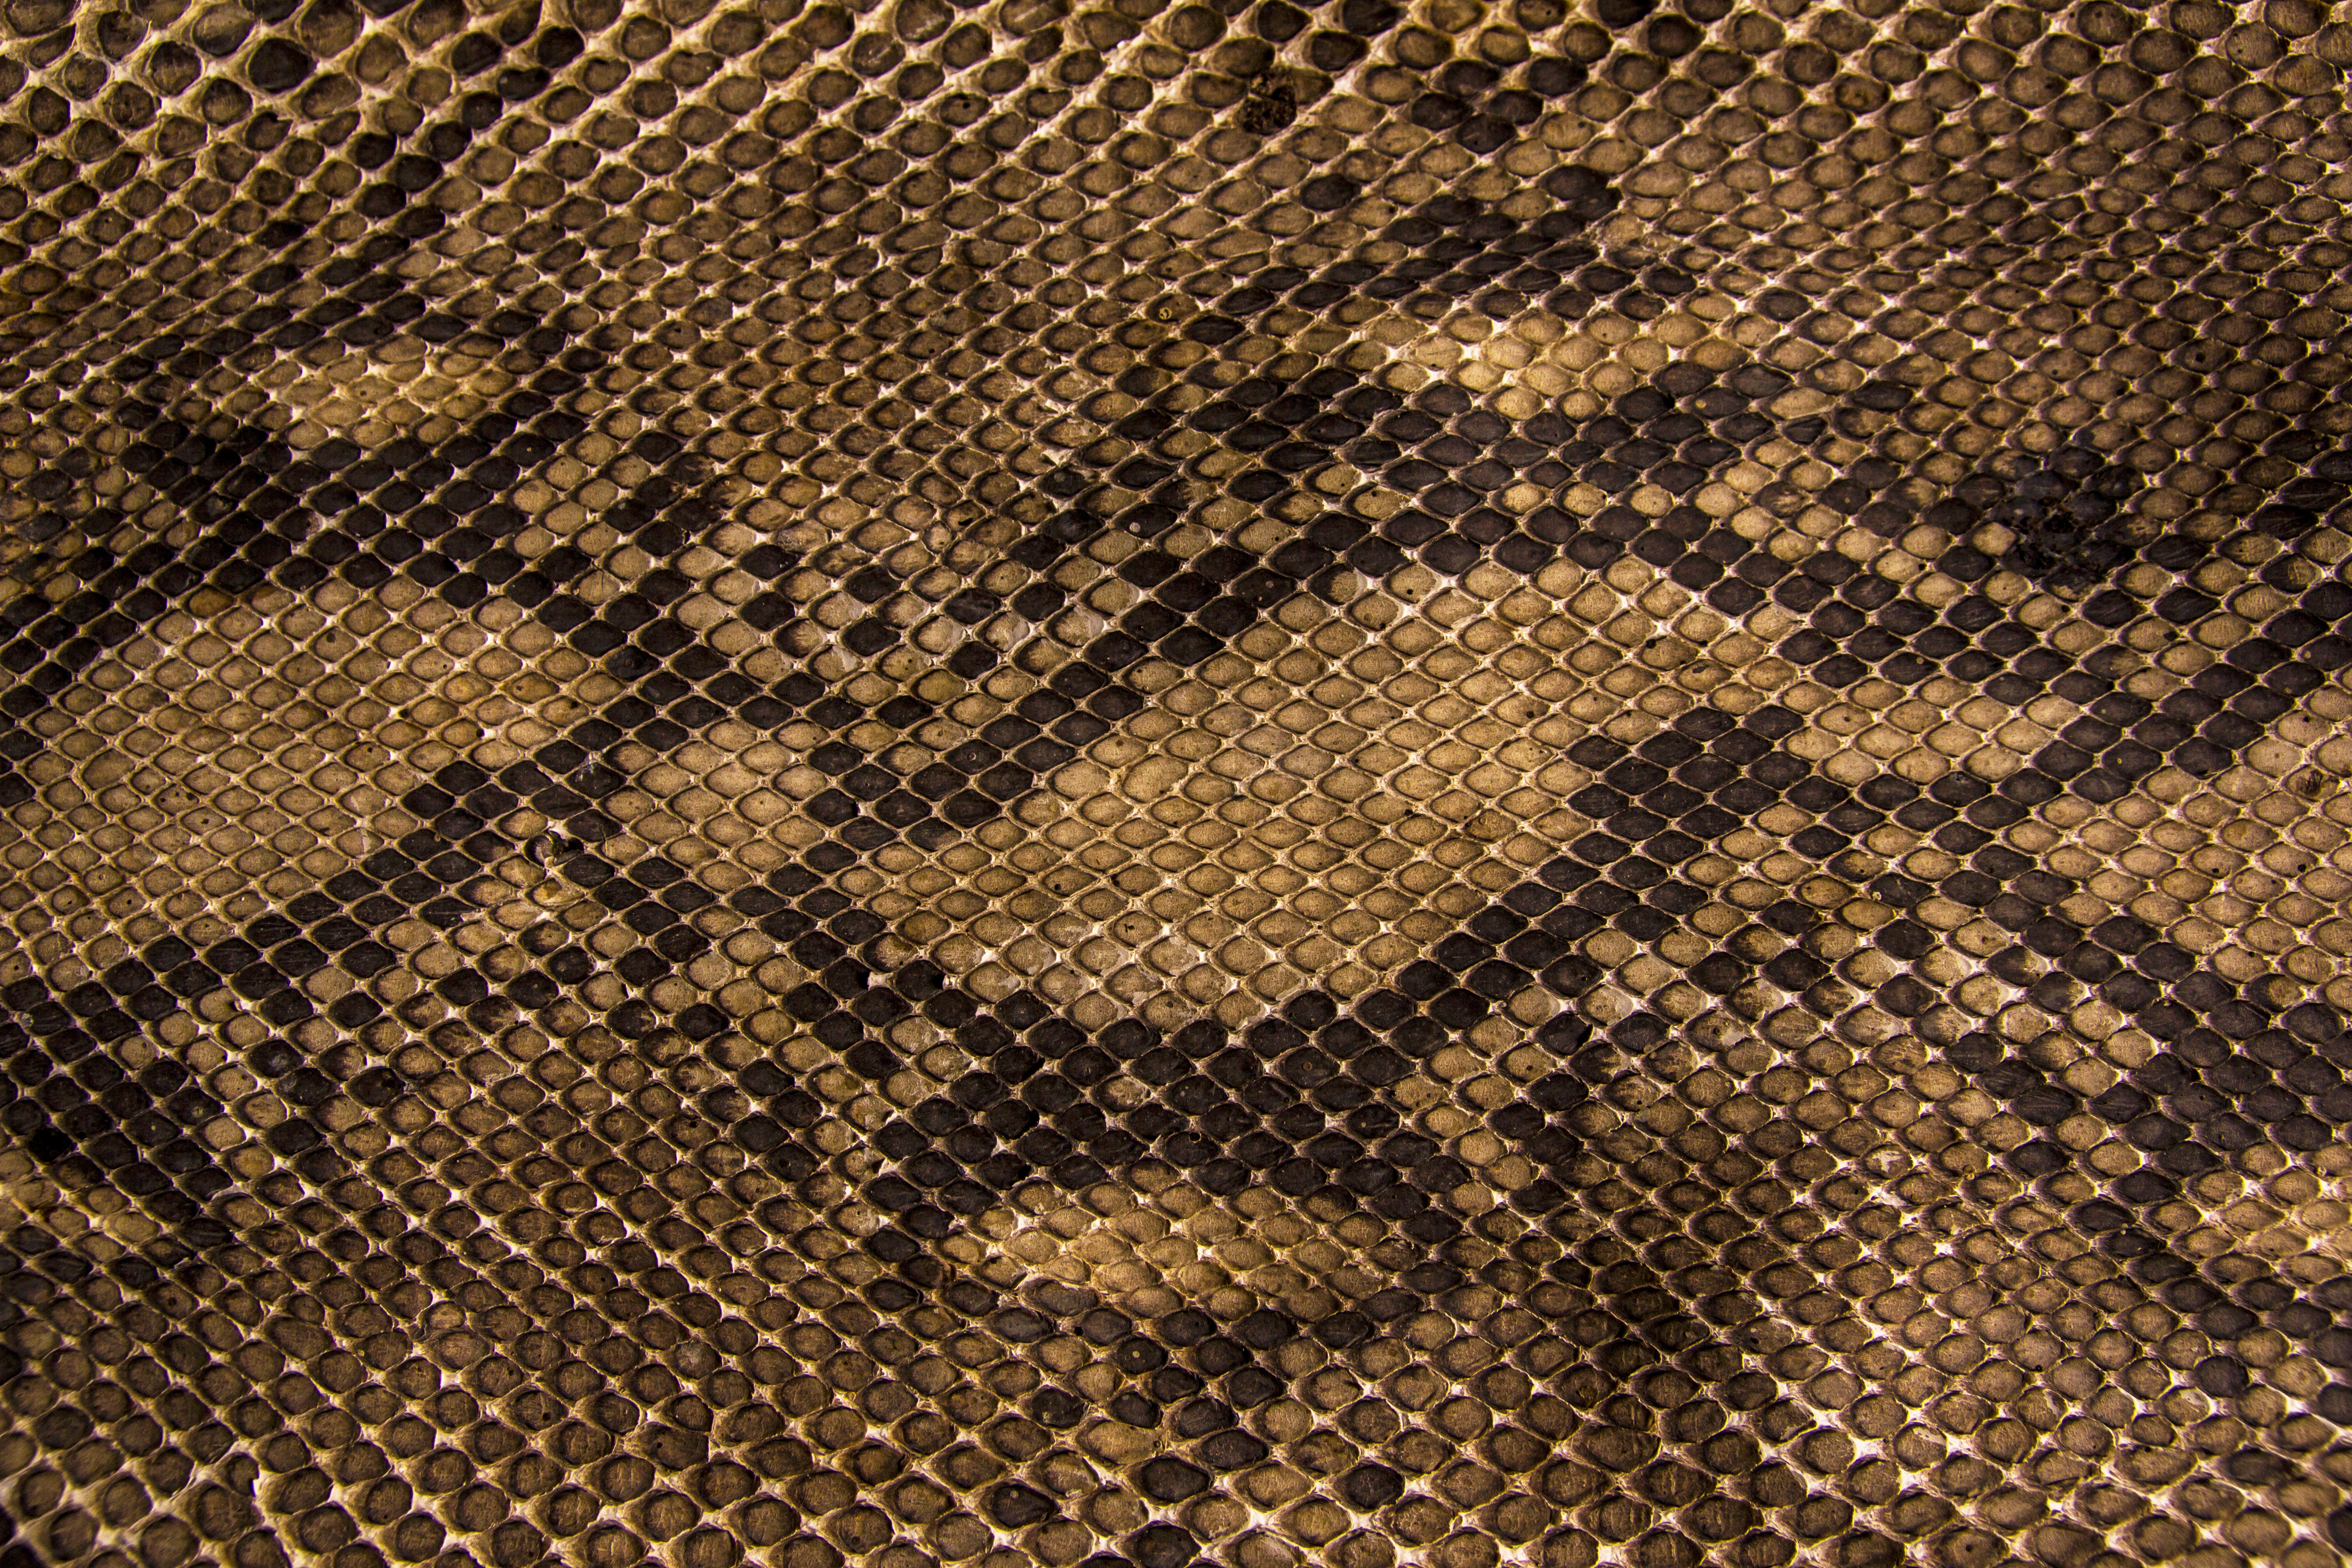 Image: Snake skin, scales, drawing